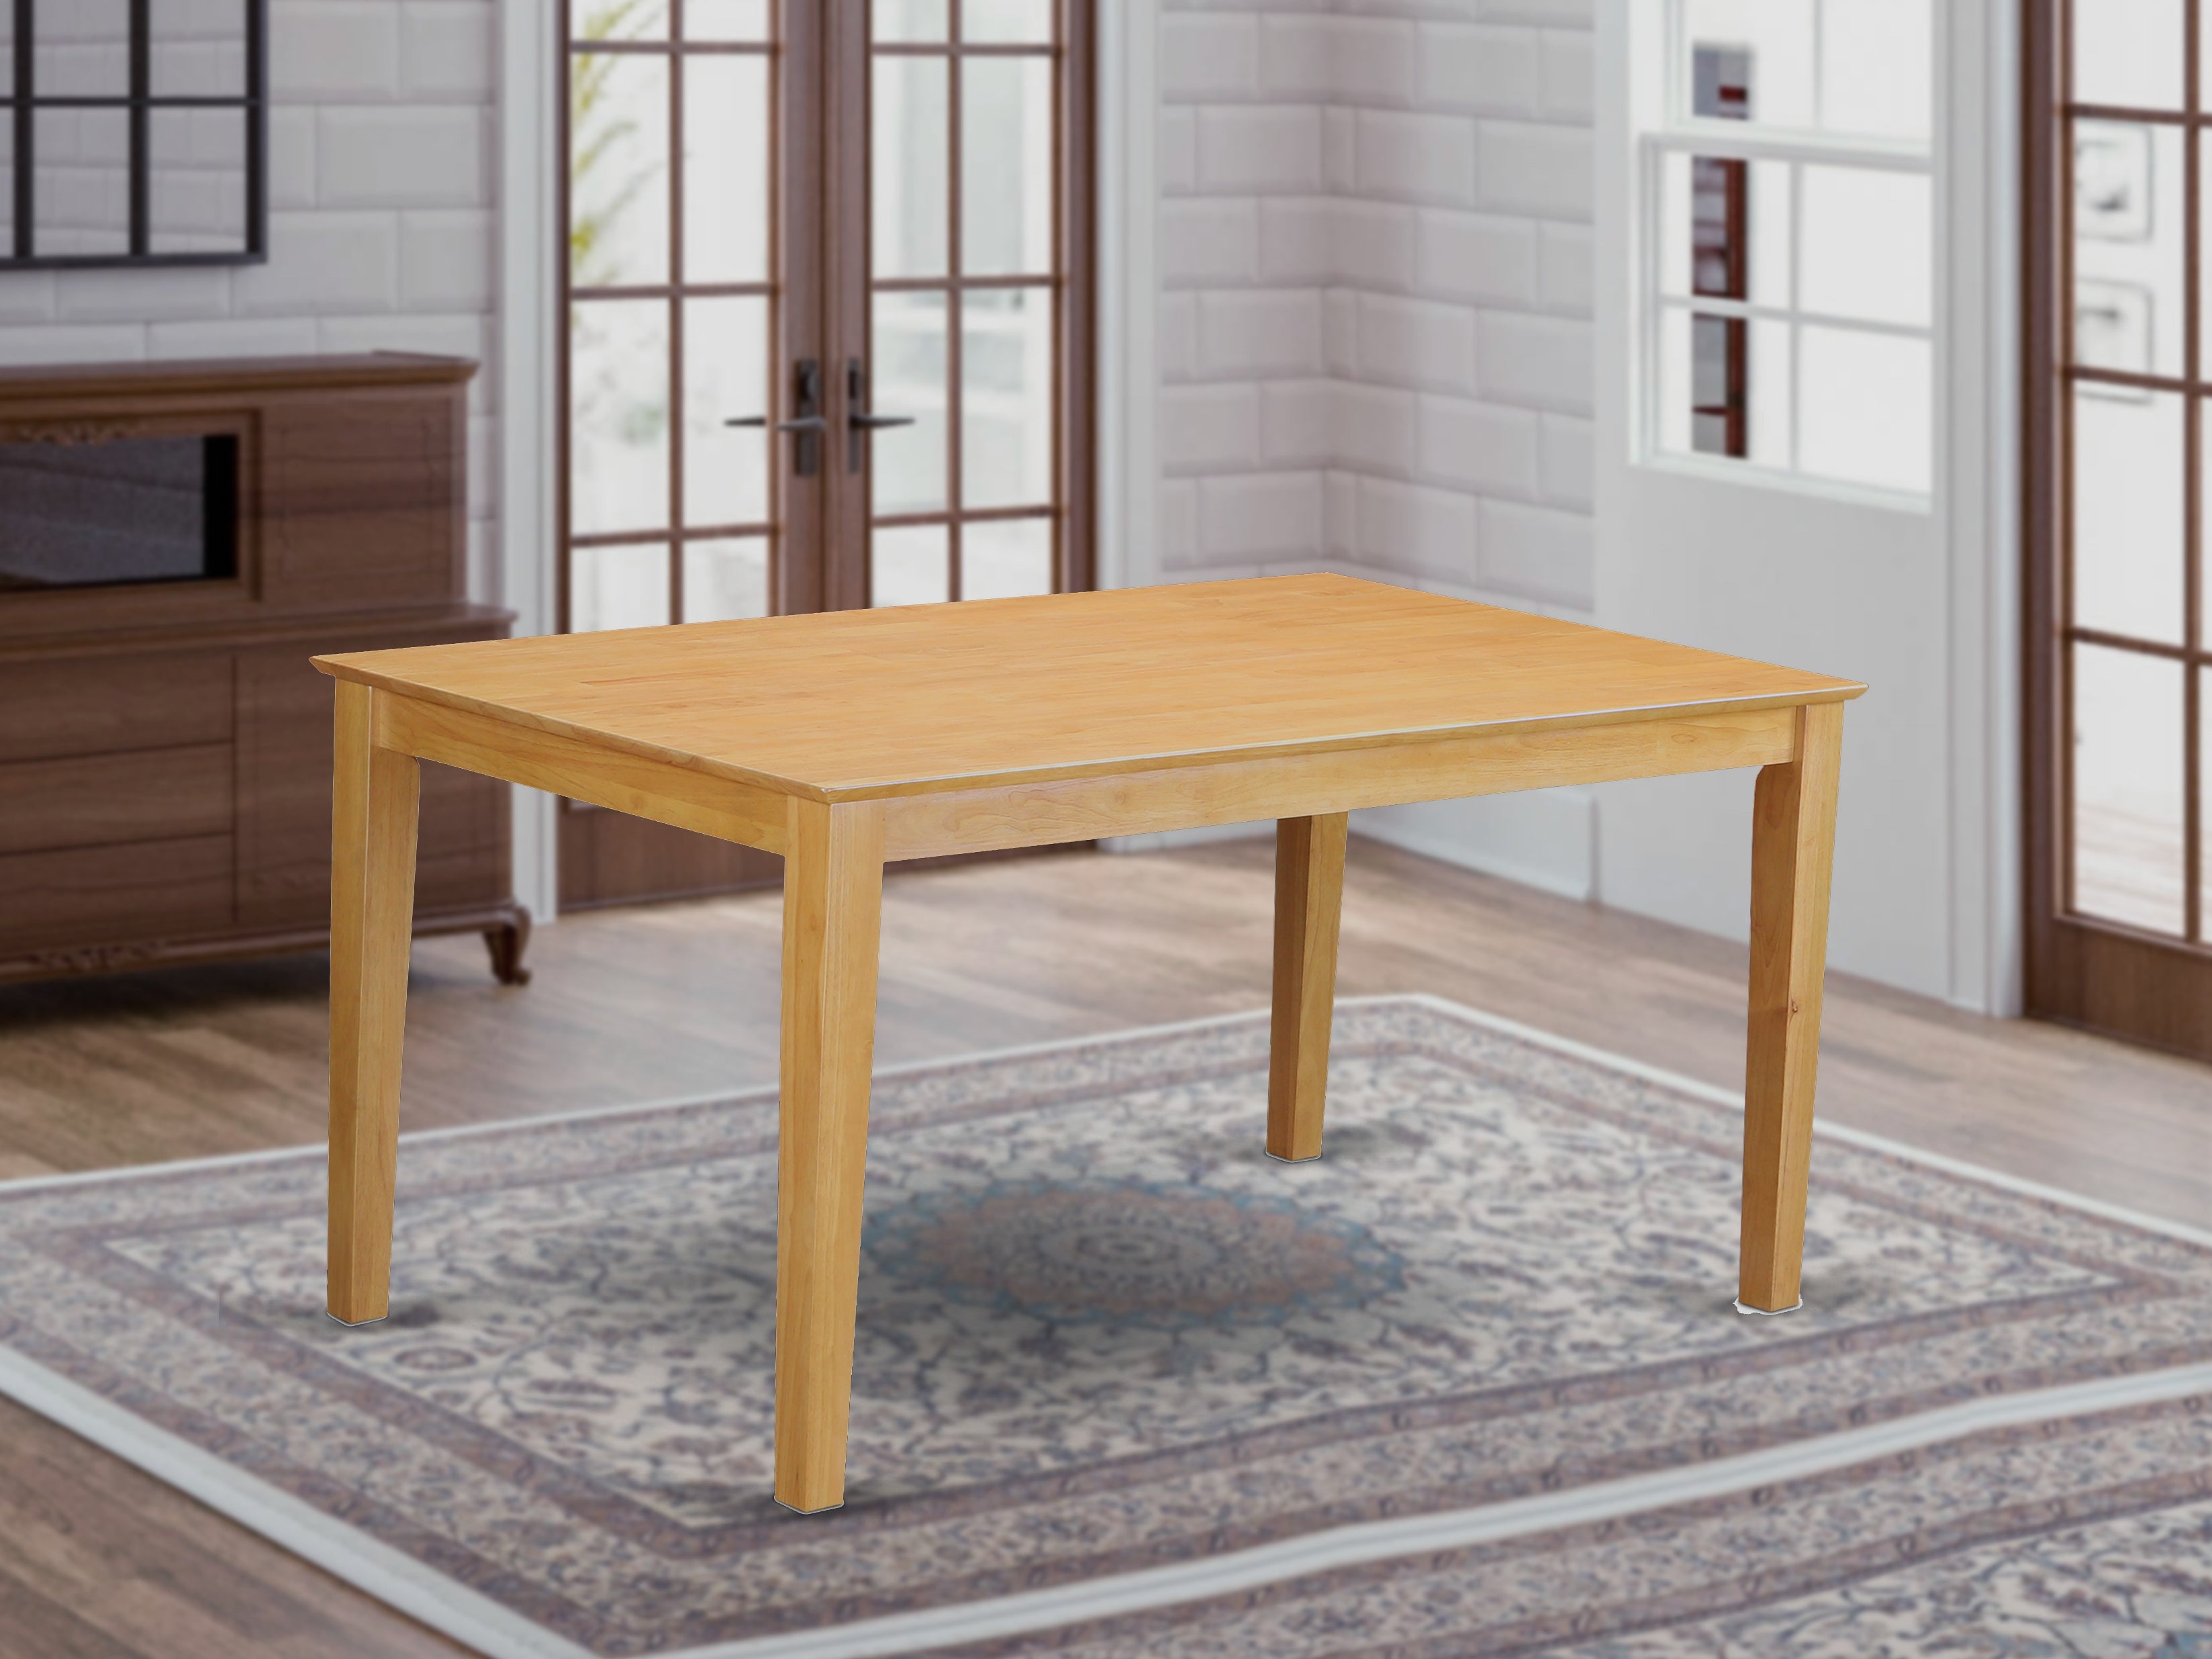 CAT-OAK-S CAT-OAK-S Capri Rectangular dining table 36"x60" with solid wood top In Cappuccino Finish